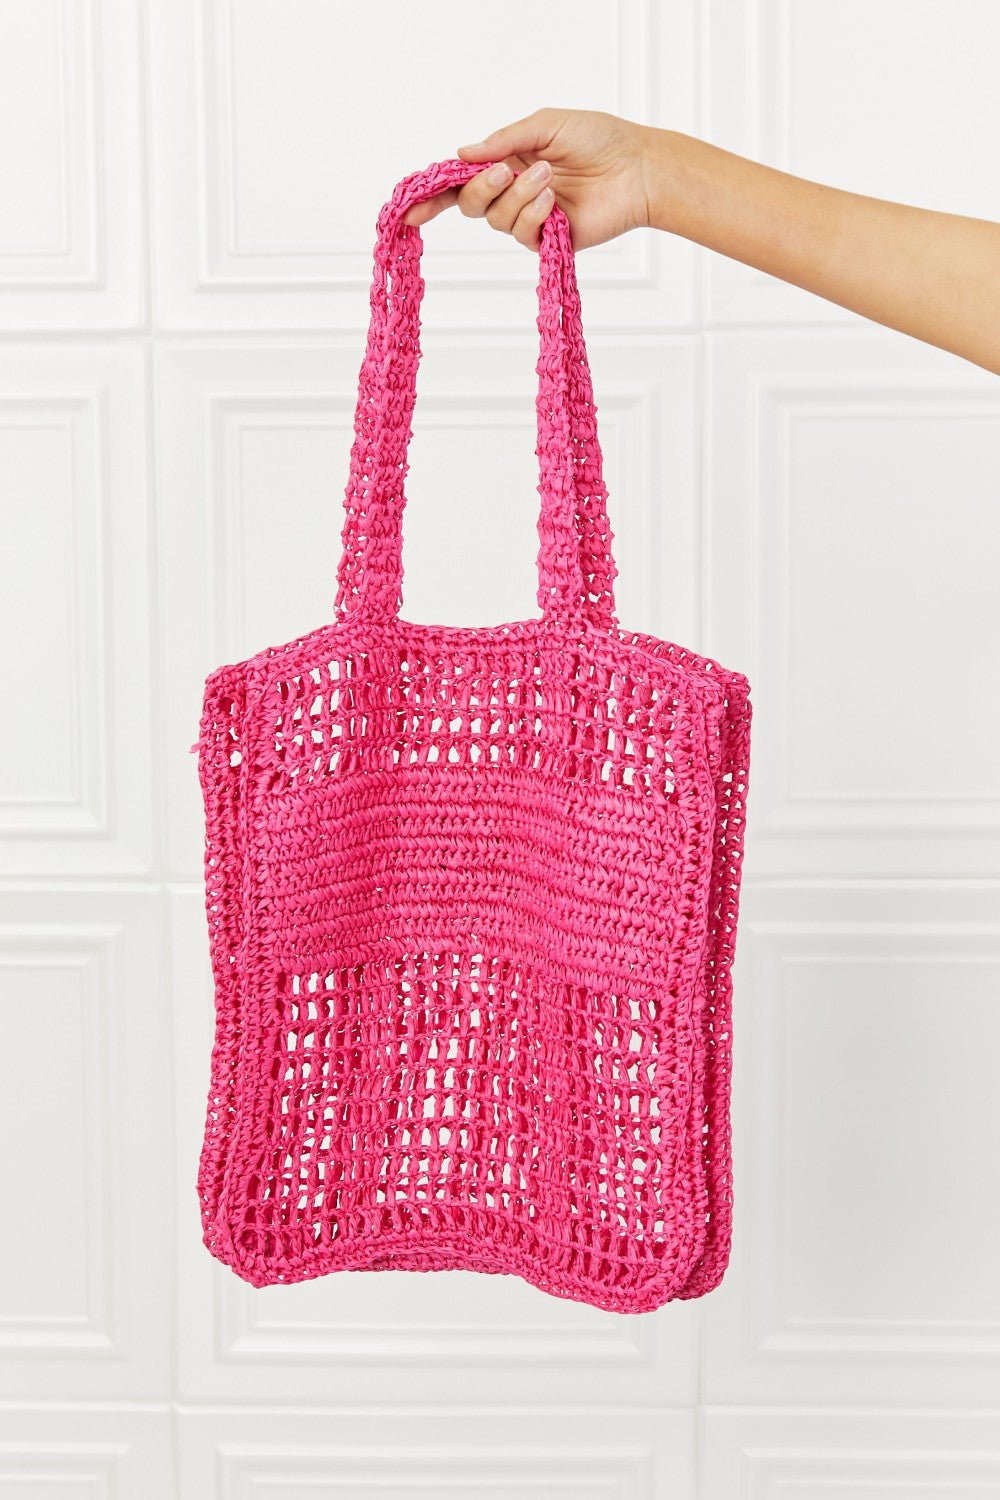 Tropic Straw Tote Bag in Hot PinkTote BagFame